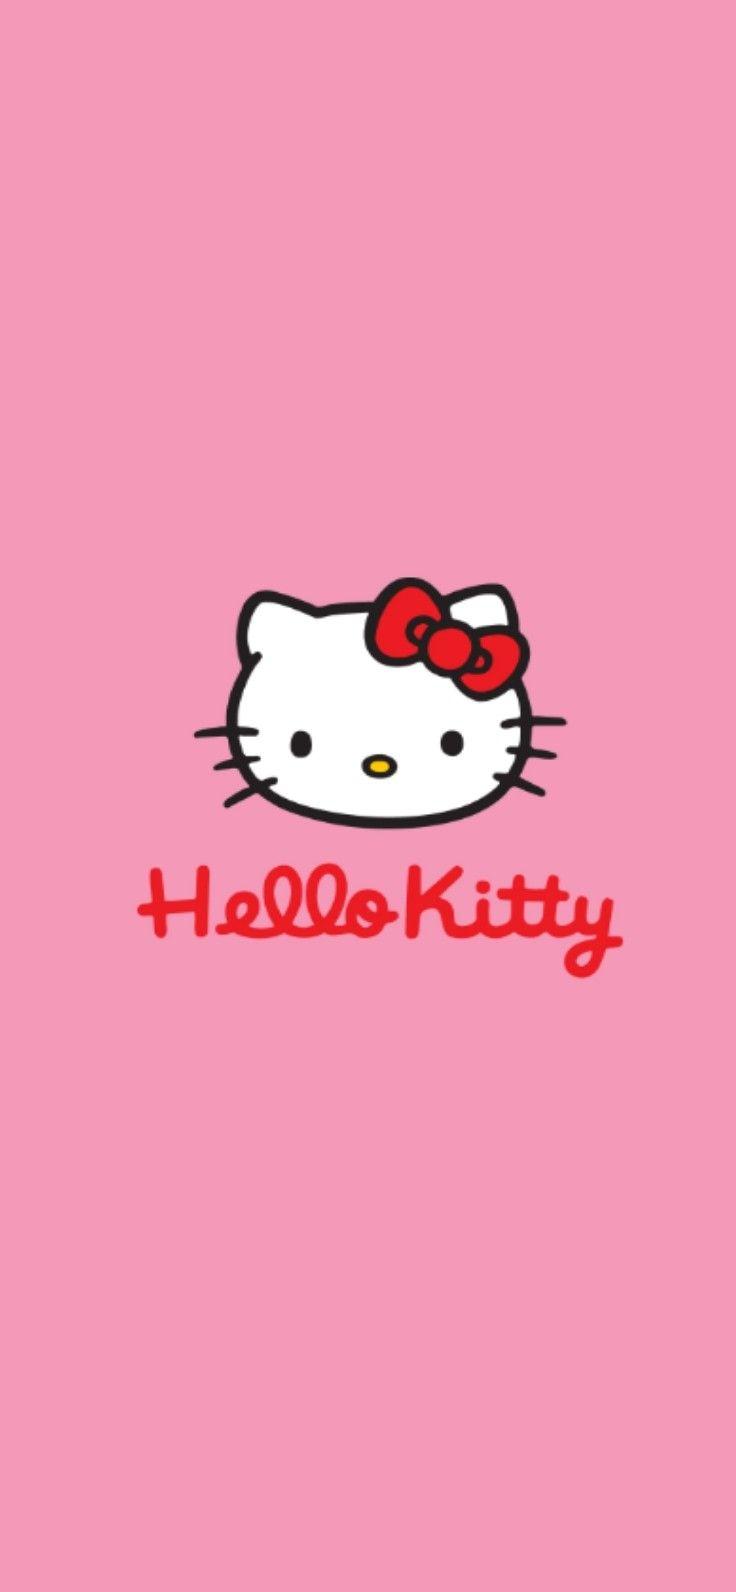 Hello Kitty Phone Wallpaper In